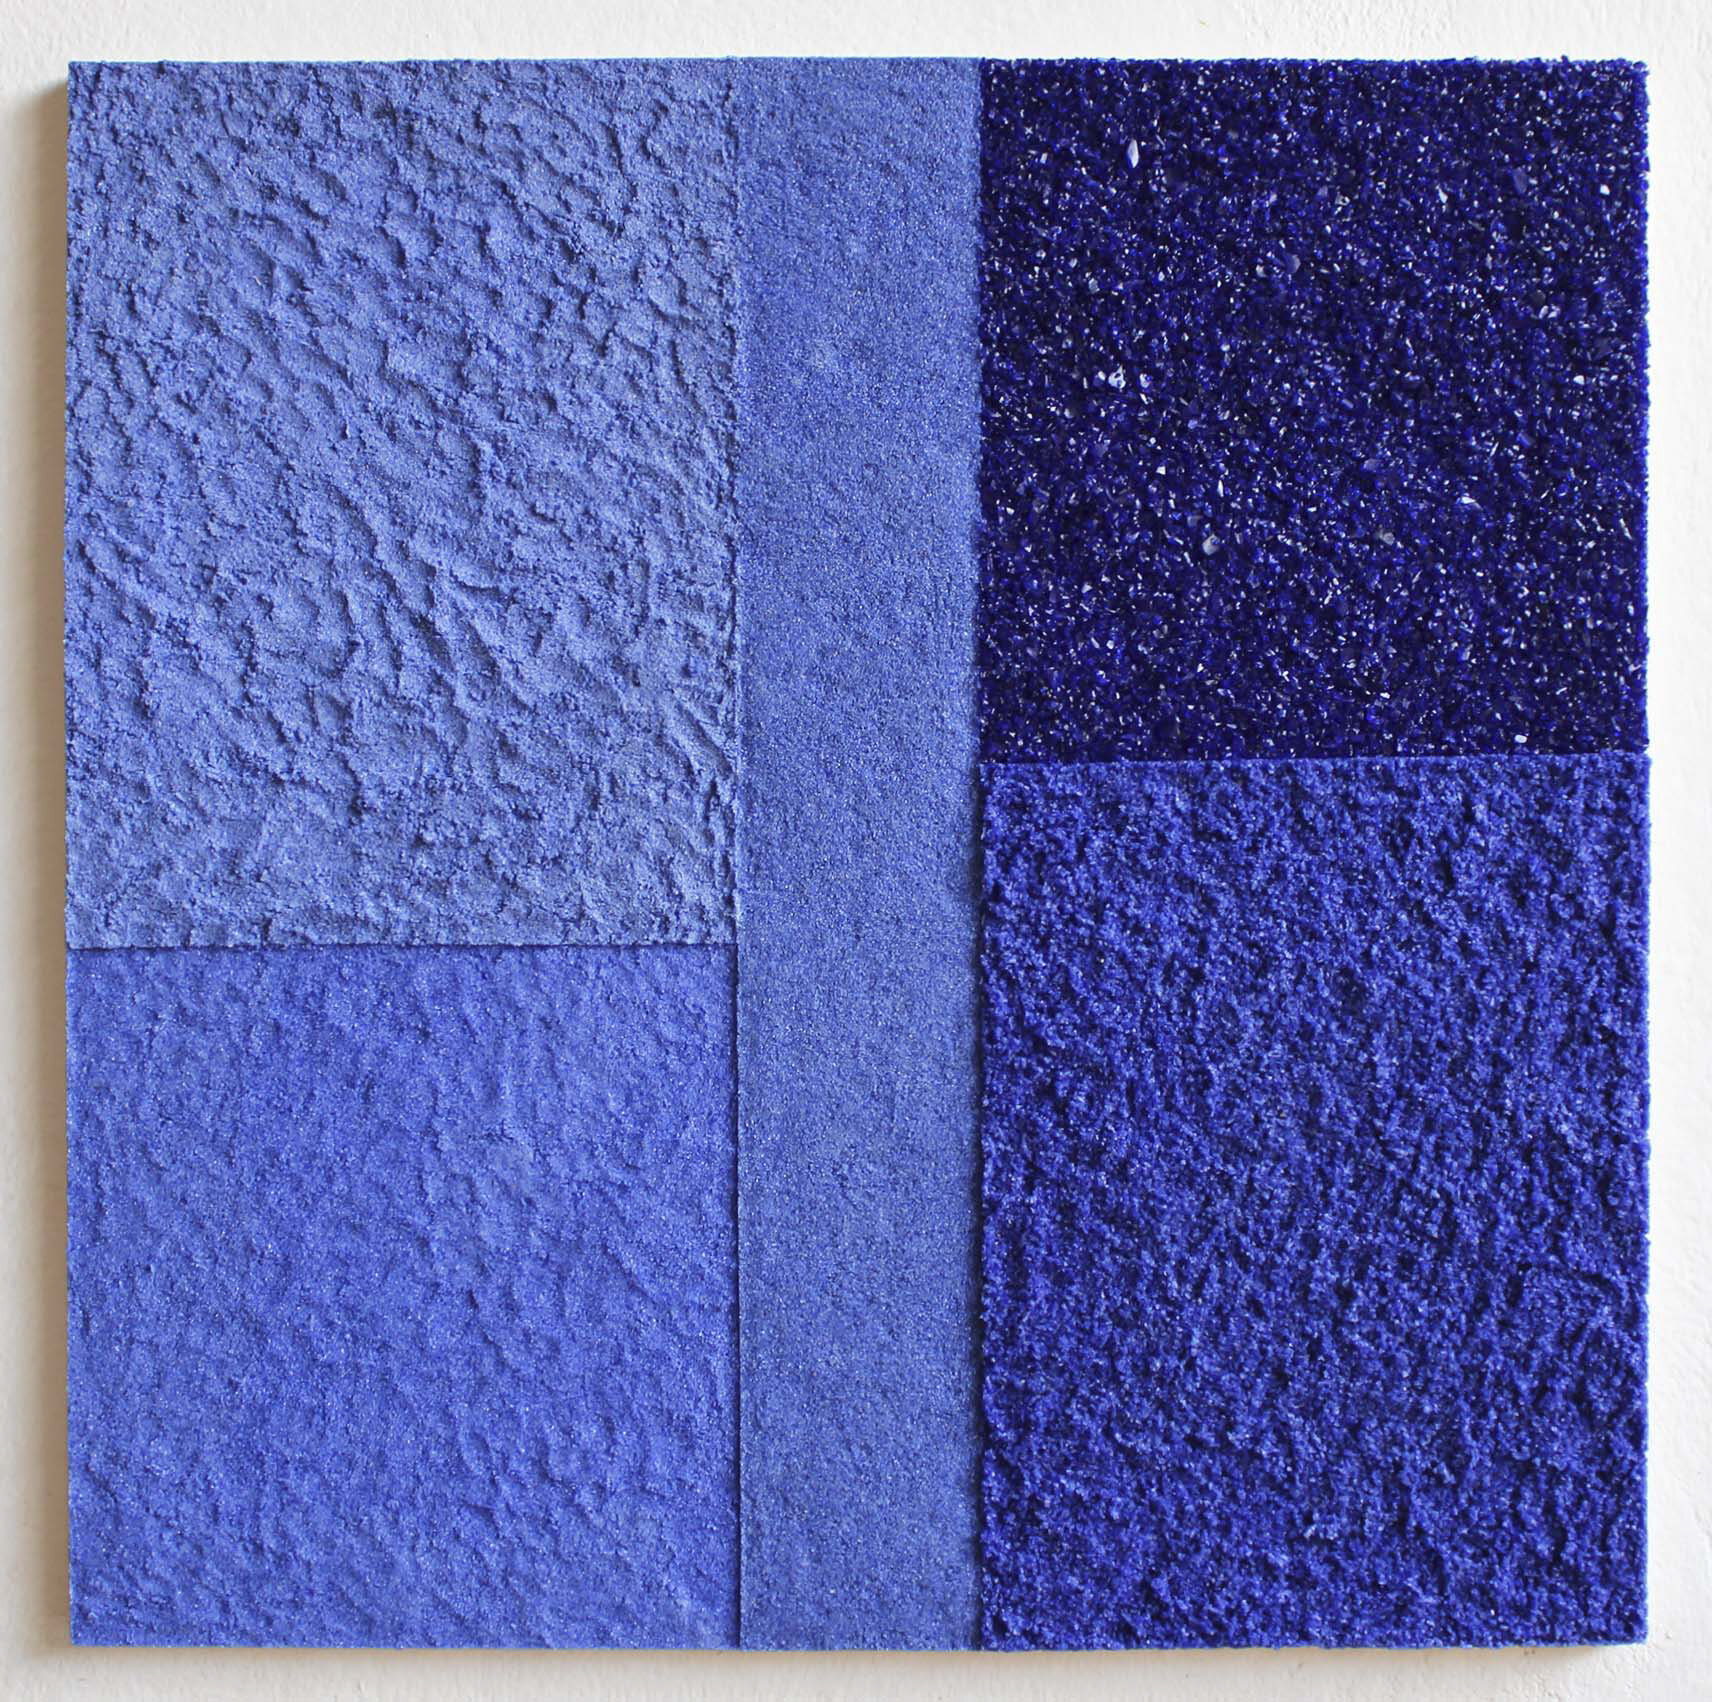 Edgar Racy | Sem Titulo, 1.19 azul | 2018 | Garrafa de vidro moídos e aglutinante sobre linho | 90x90cm